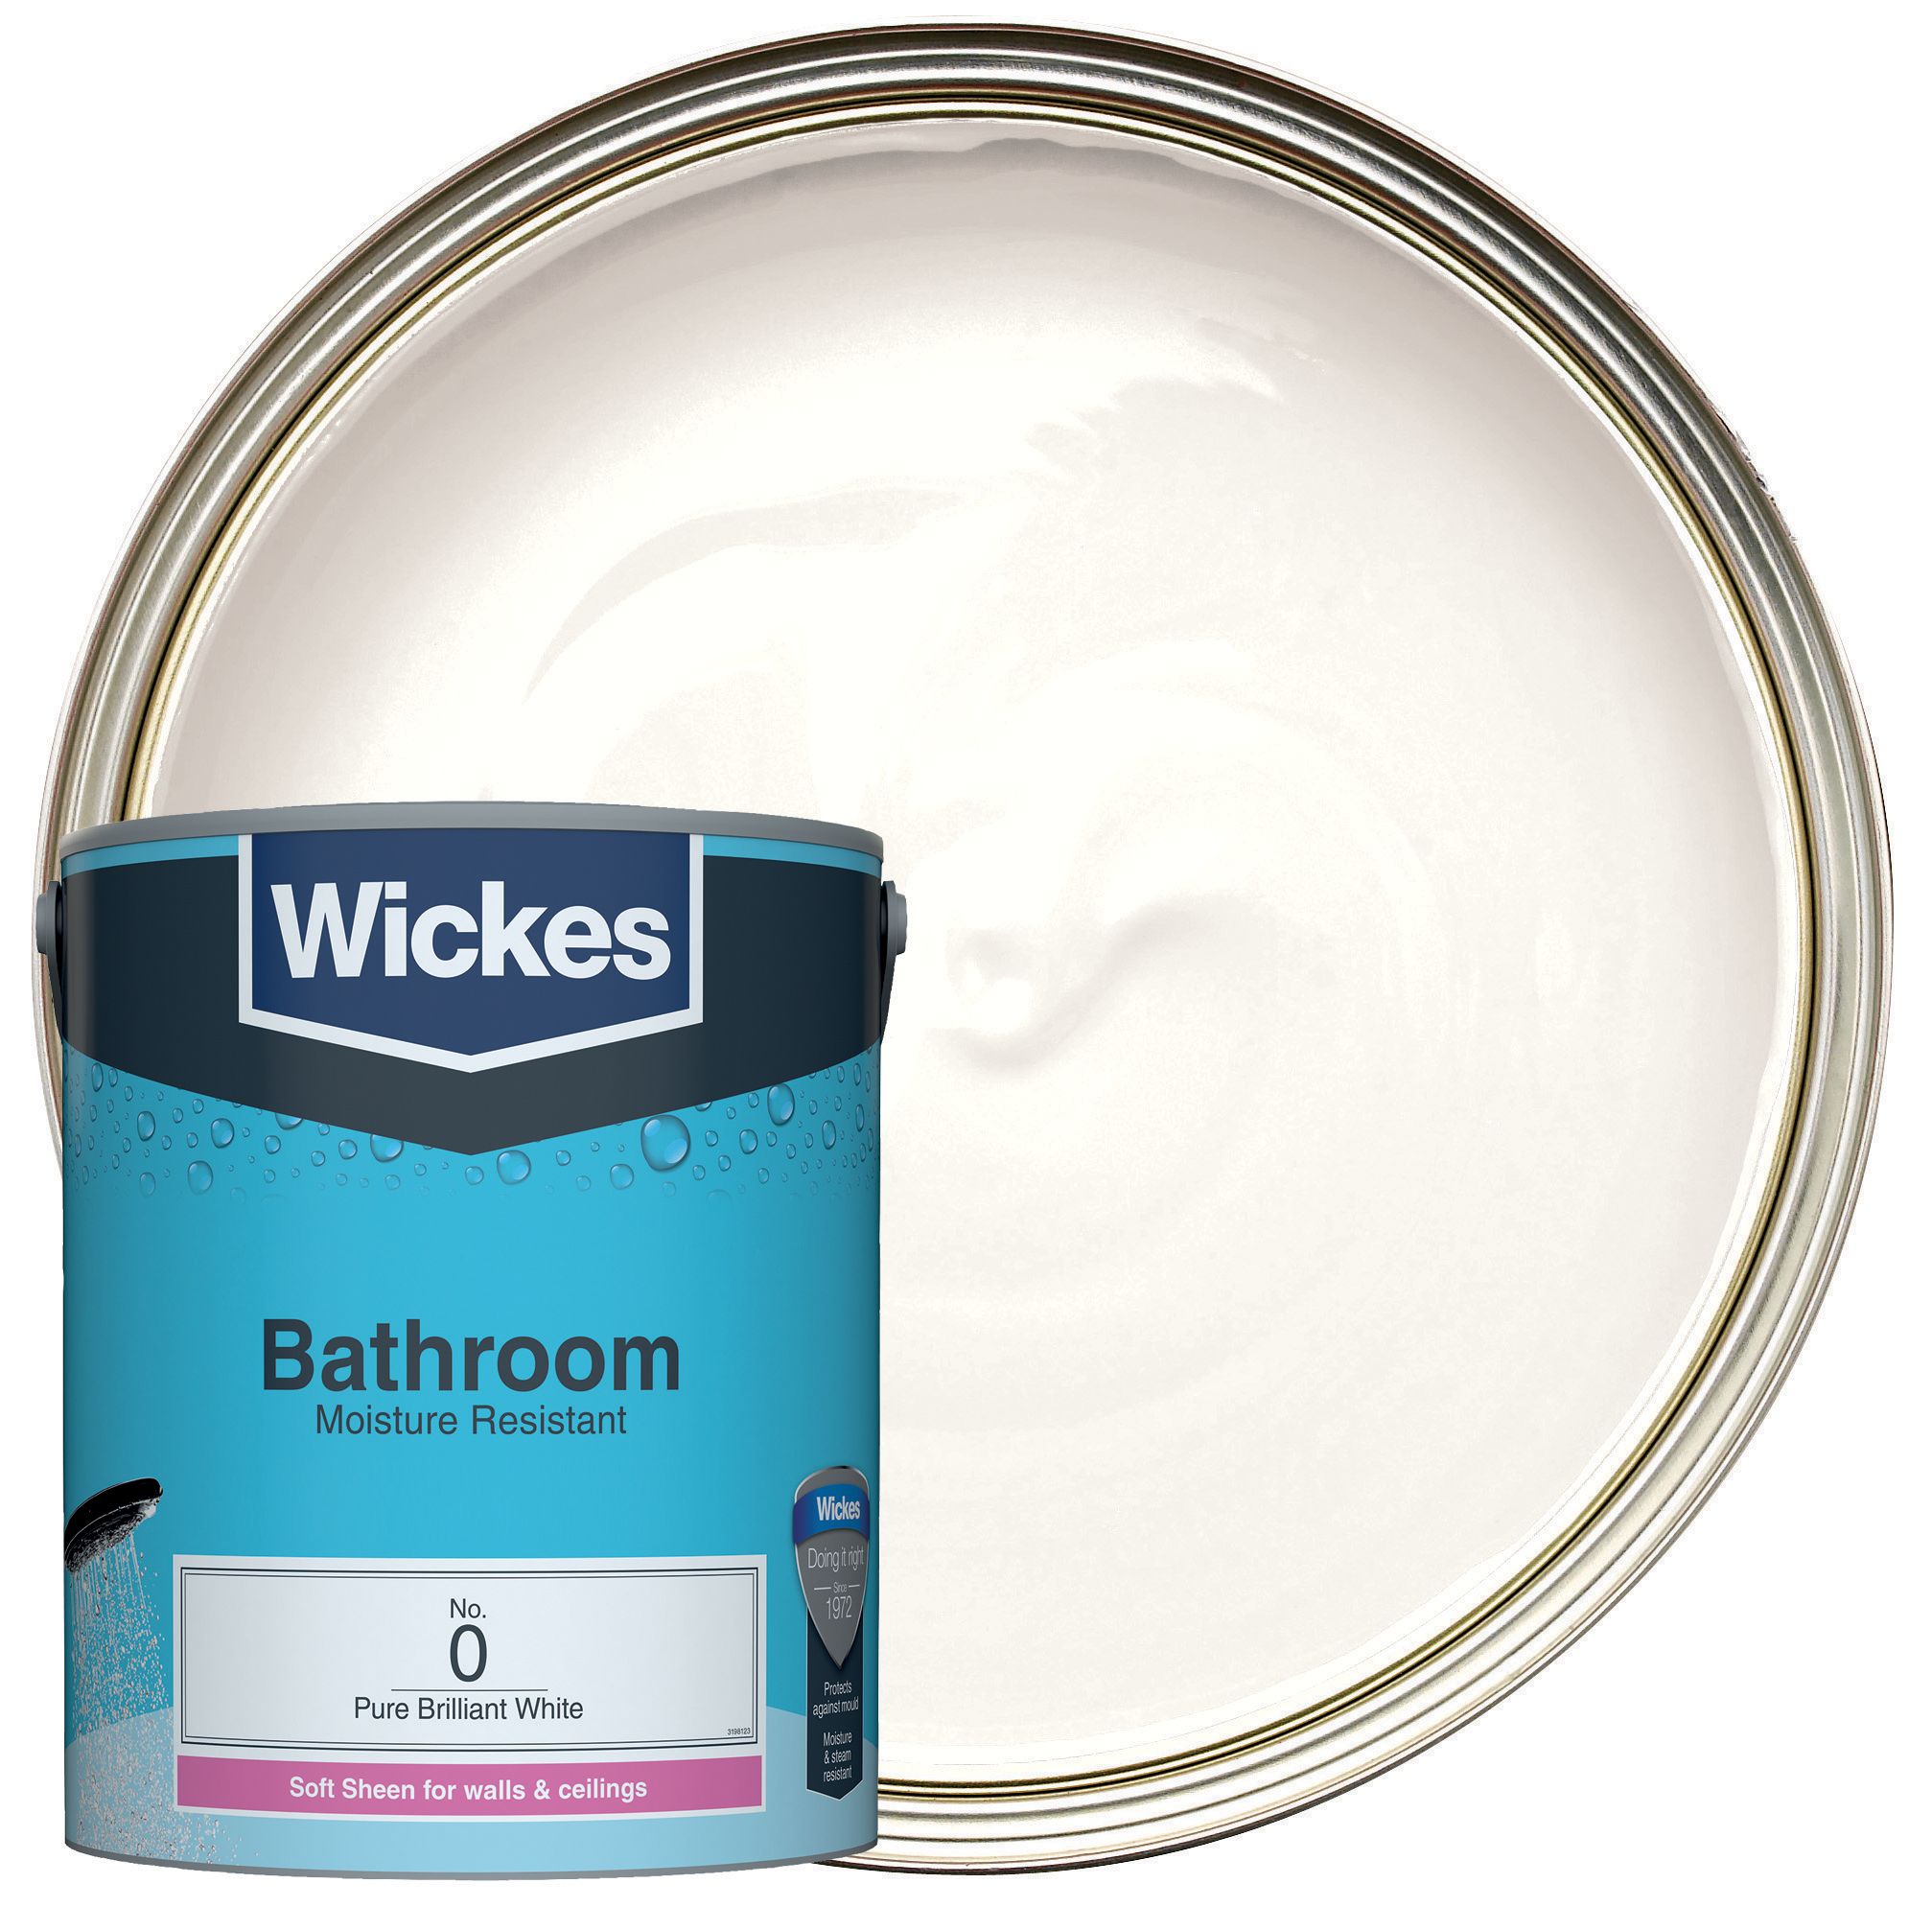 Wickes Bathroom Soft Sheen Emulsion Paint - Pure Brilliant White No.0 - 5L